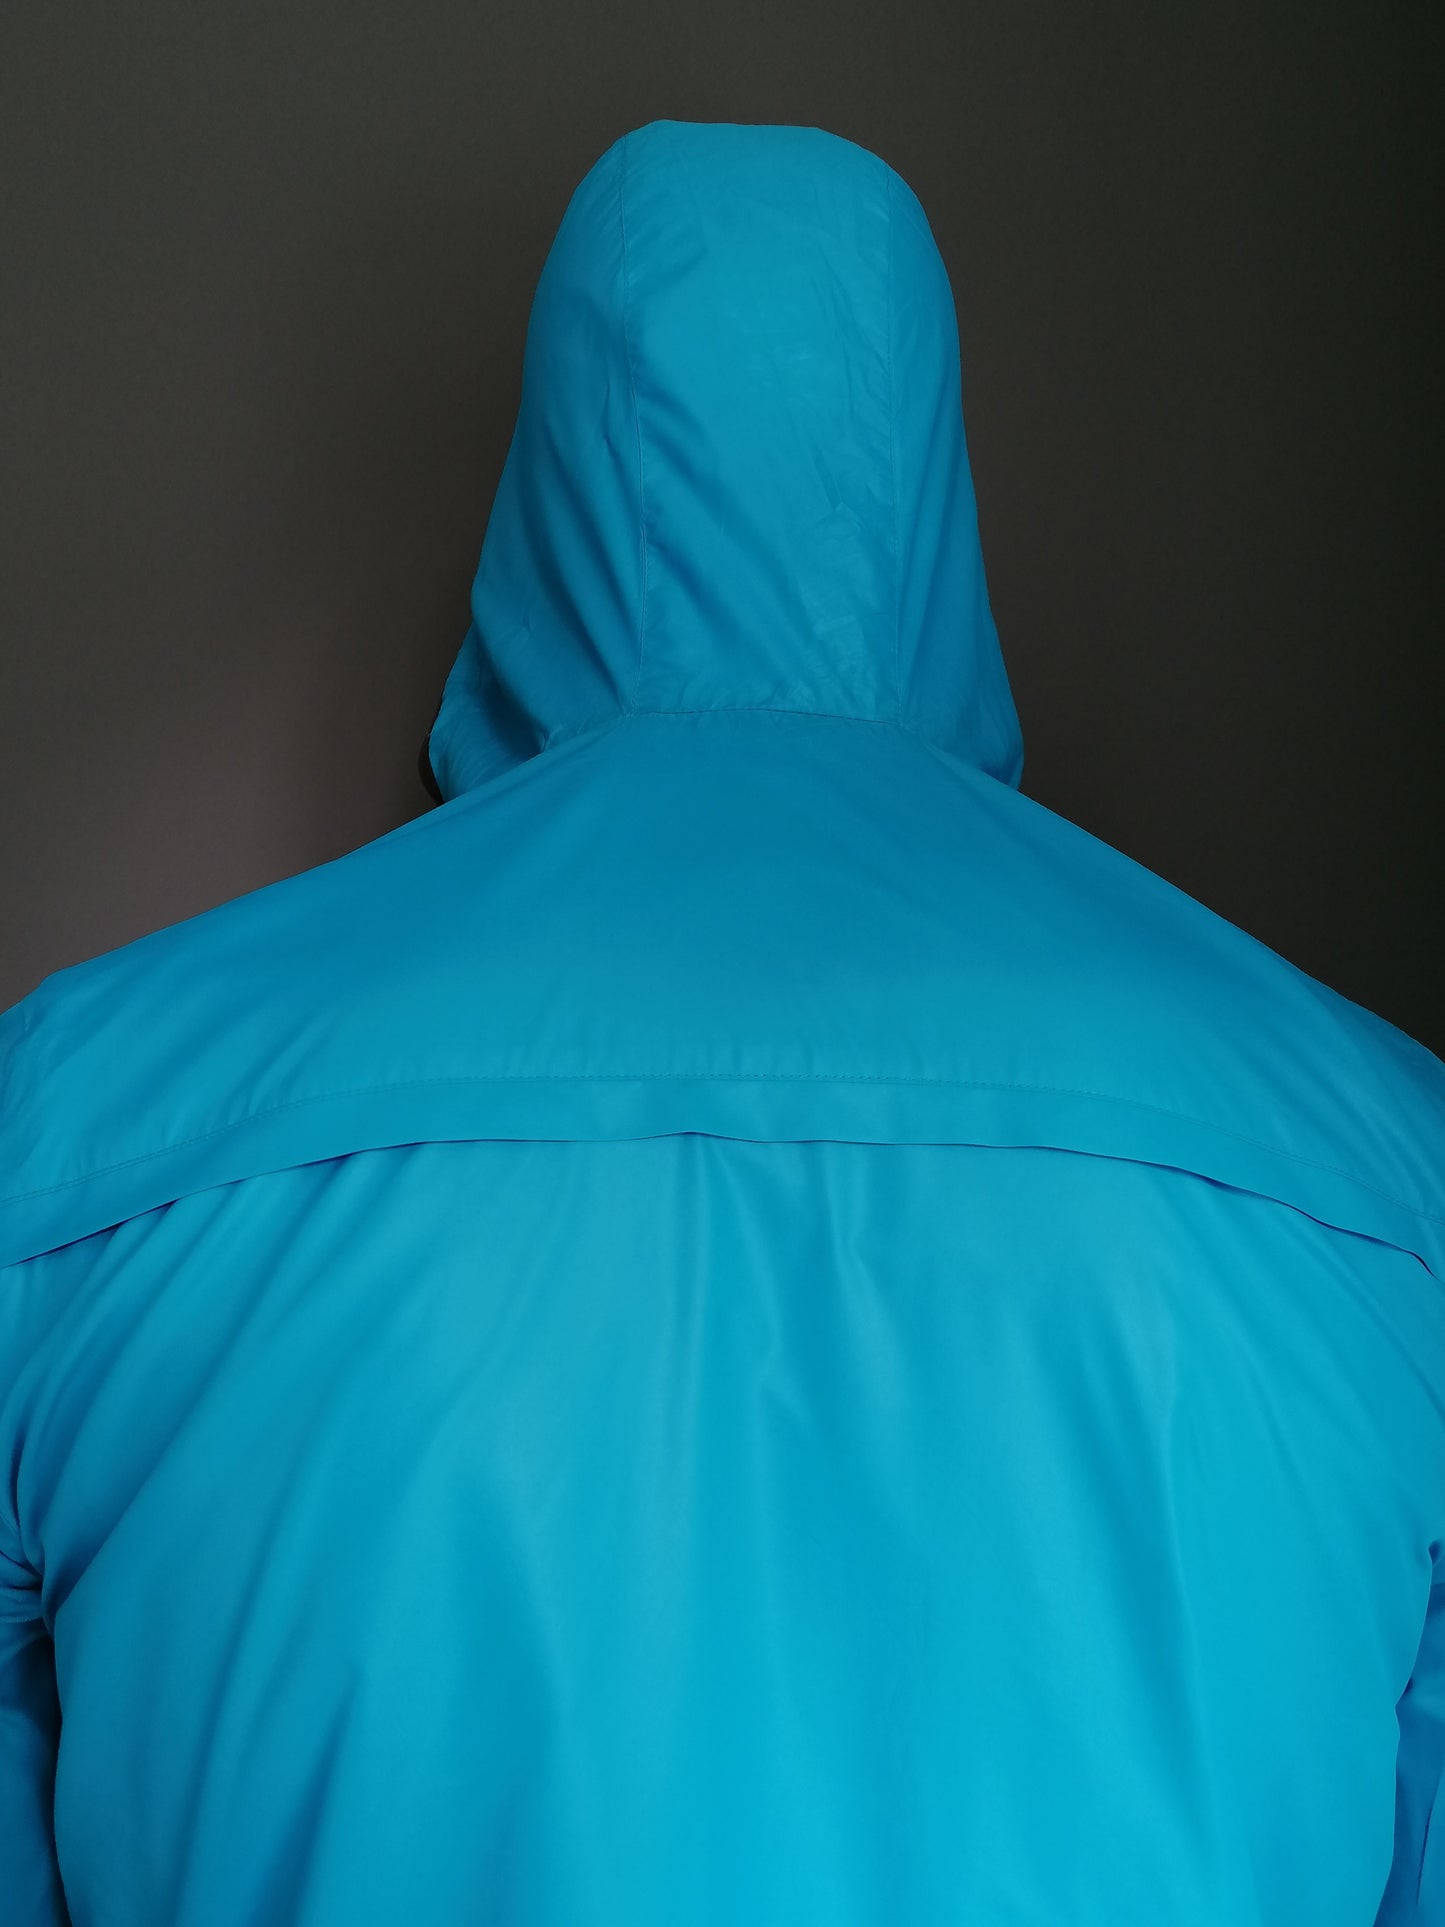 Brian Dales Chaqueta de verano de doble llagación / reversible con capucha. Marrón o azul. Tamaño 50 / M.